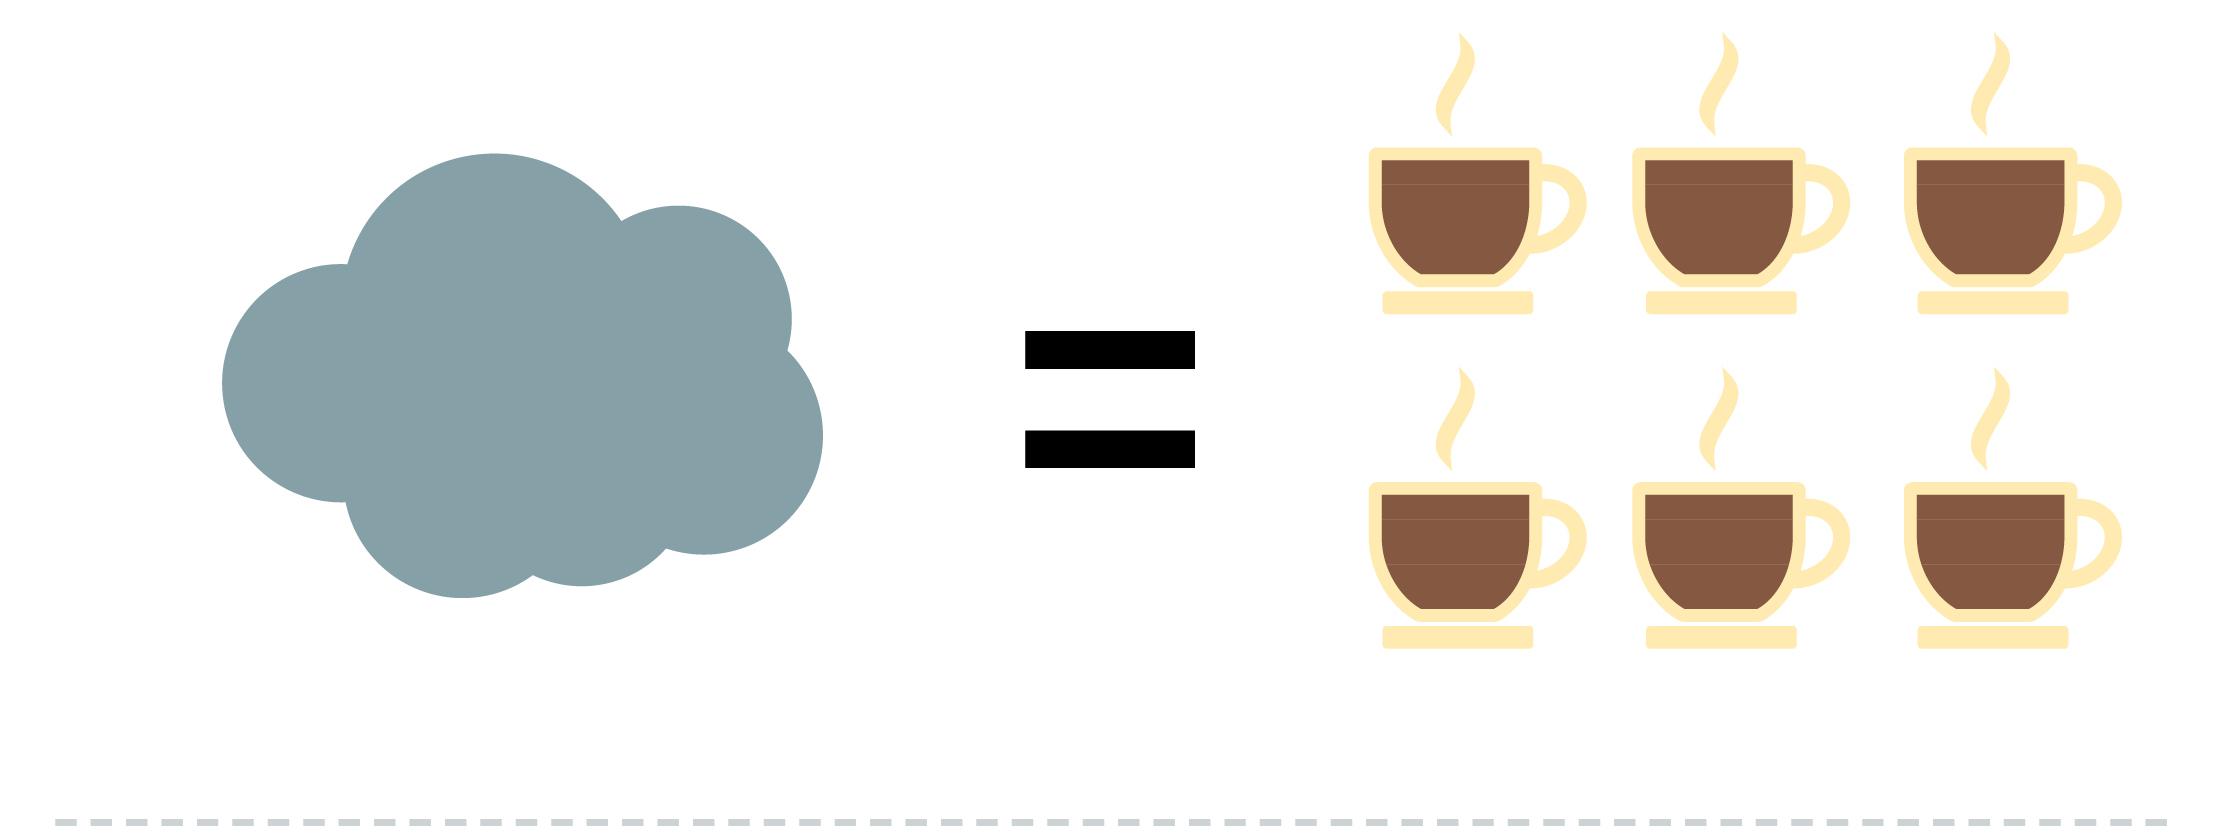 Ecobilans - Stockage cloud vs café [RTS - RTS]